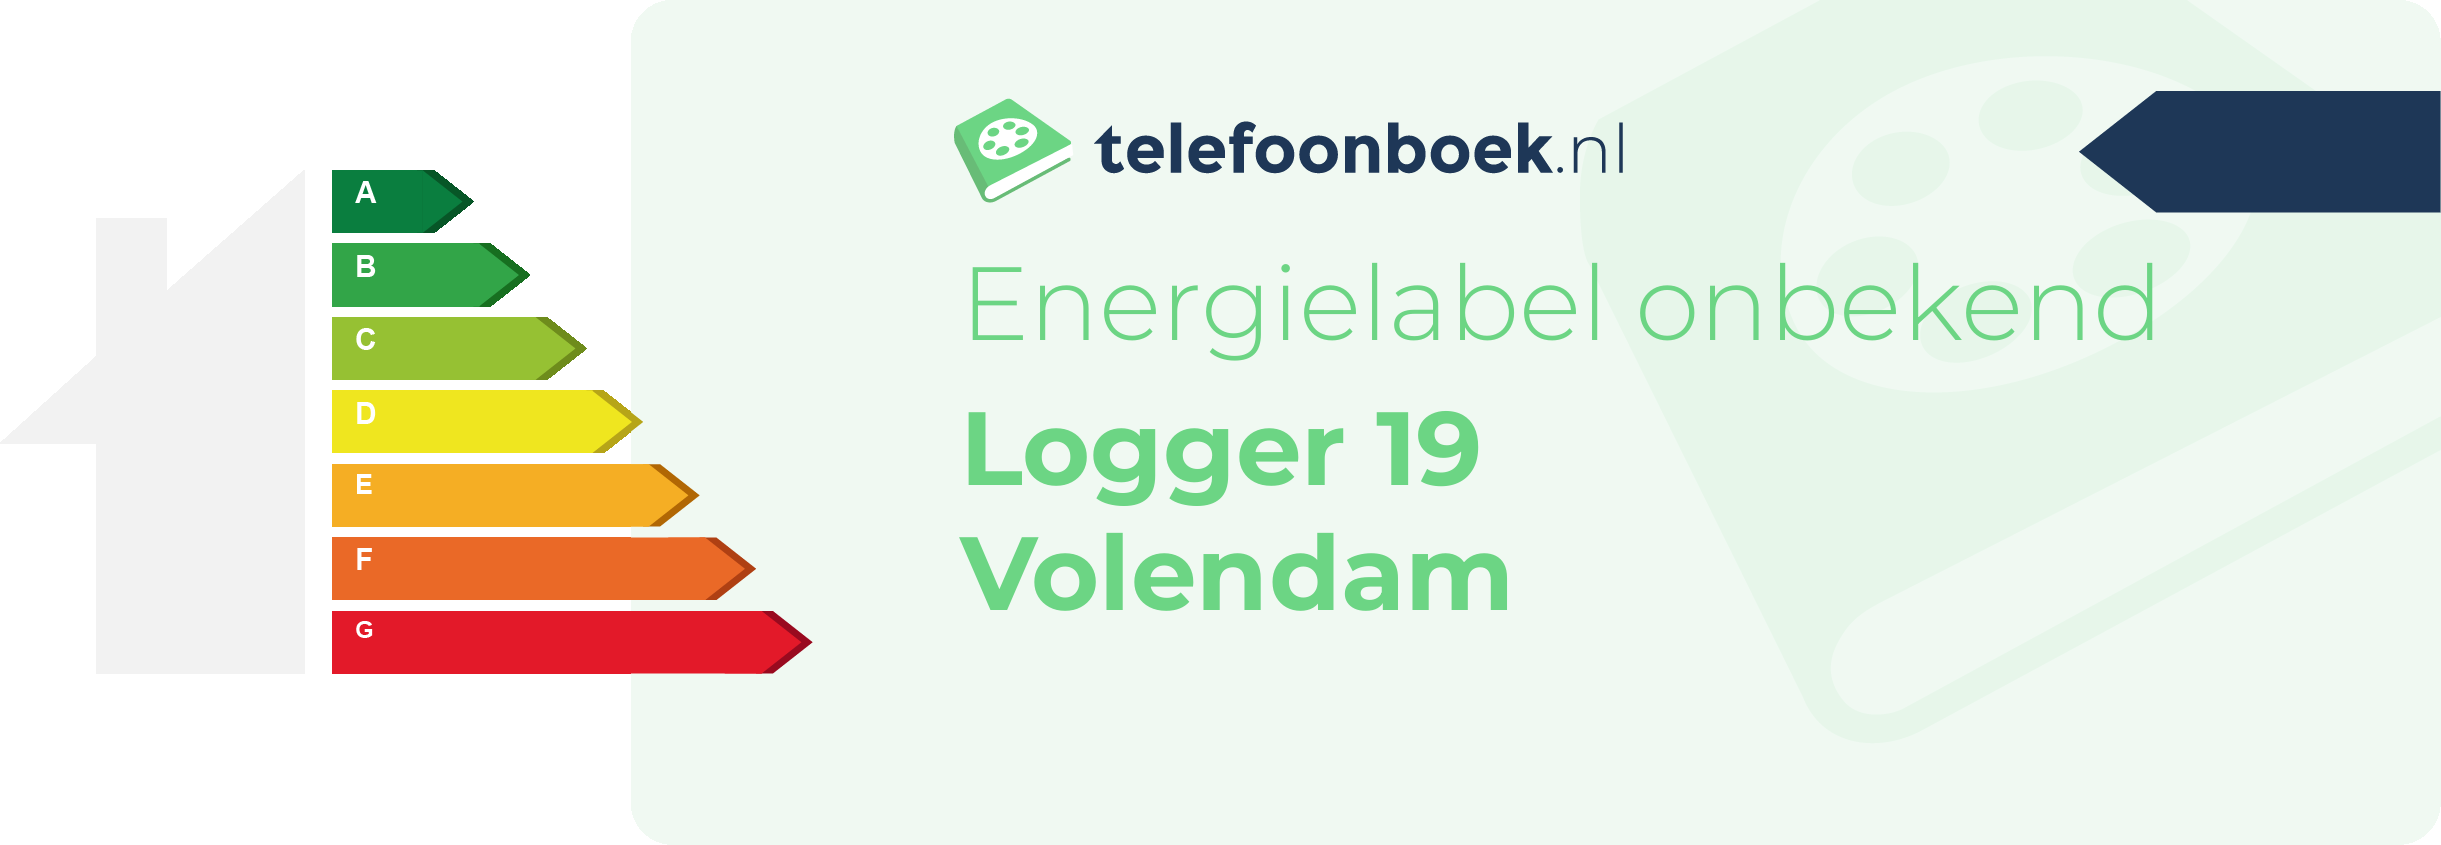 Energielabel Logger 19 Volendam